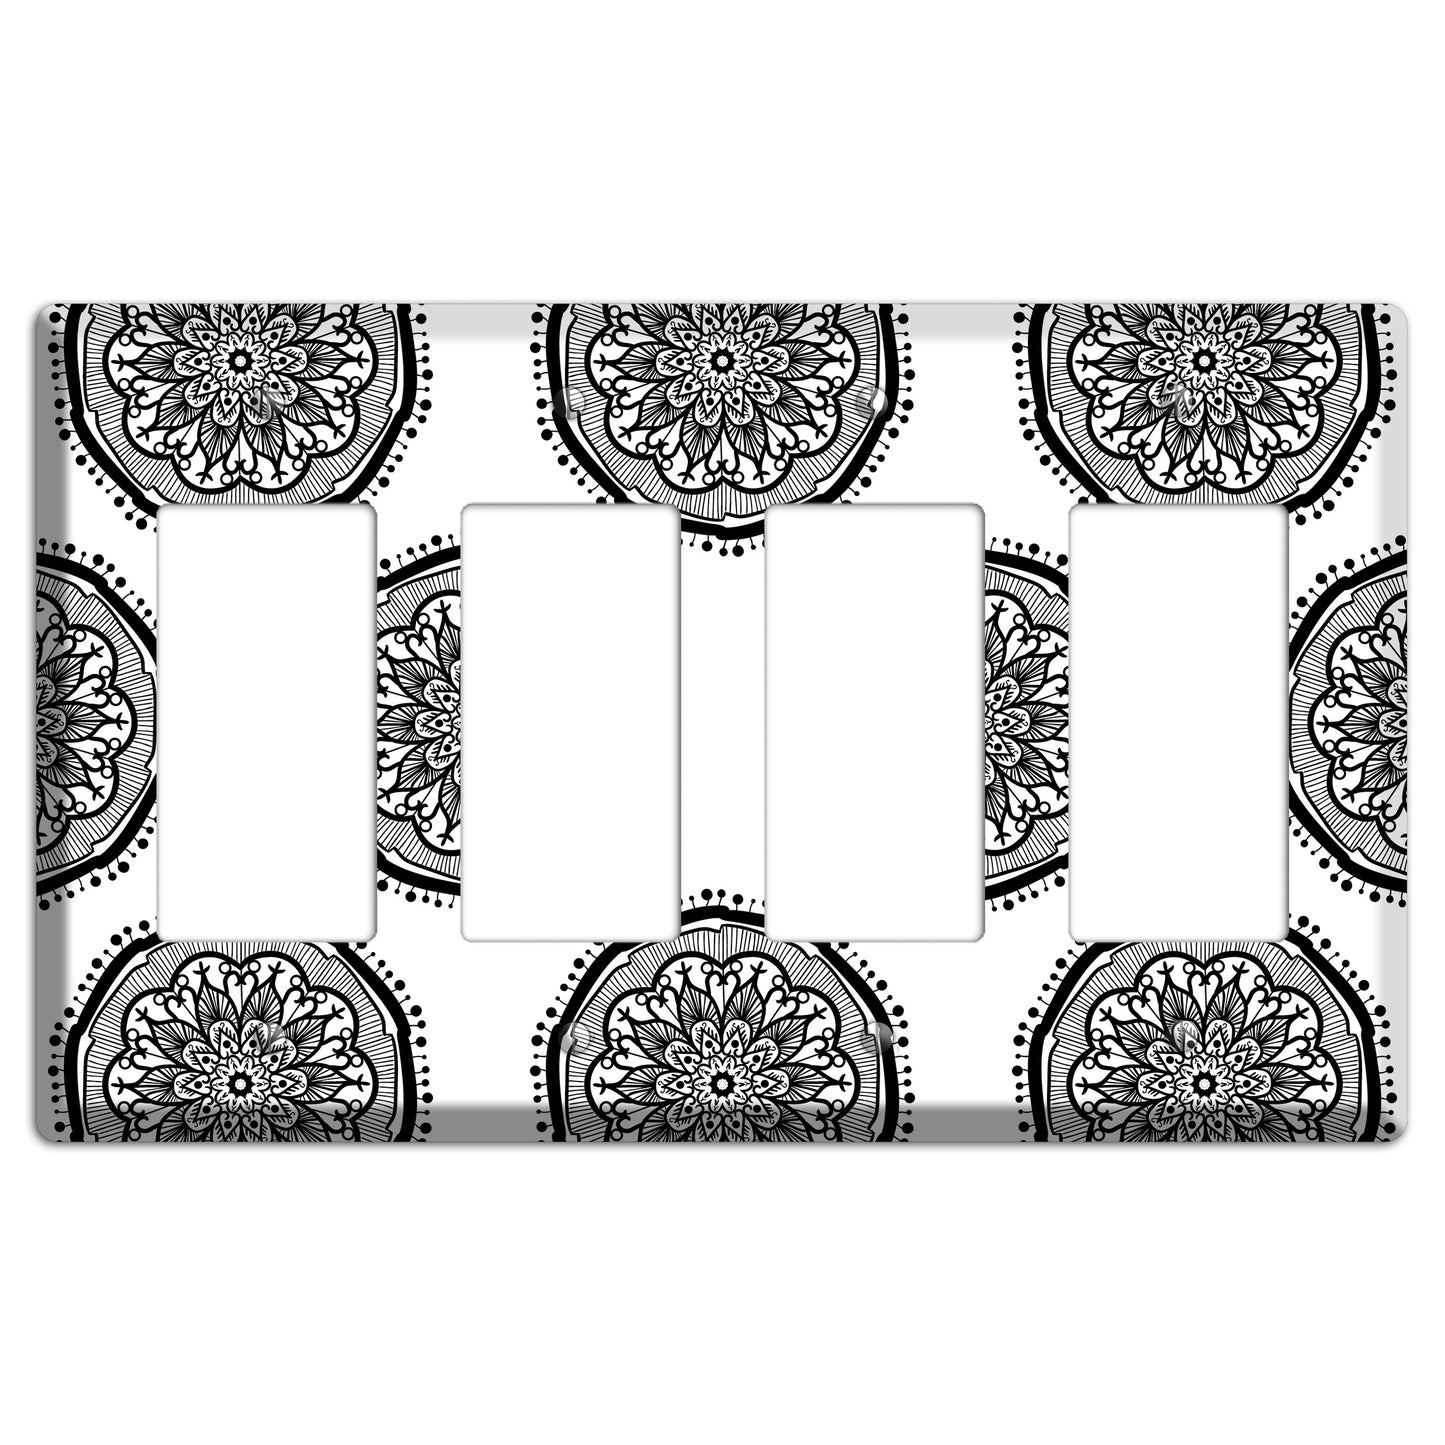 Mandala Black and White Style R Cover Plates 4 Rocker Wallplate